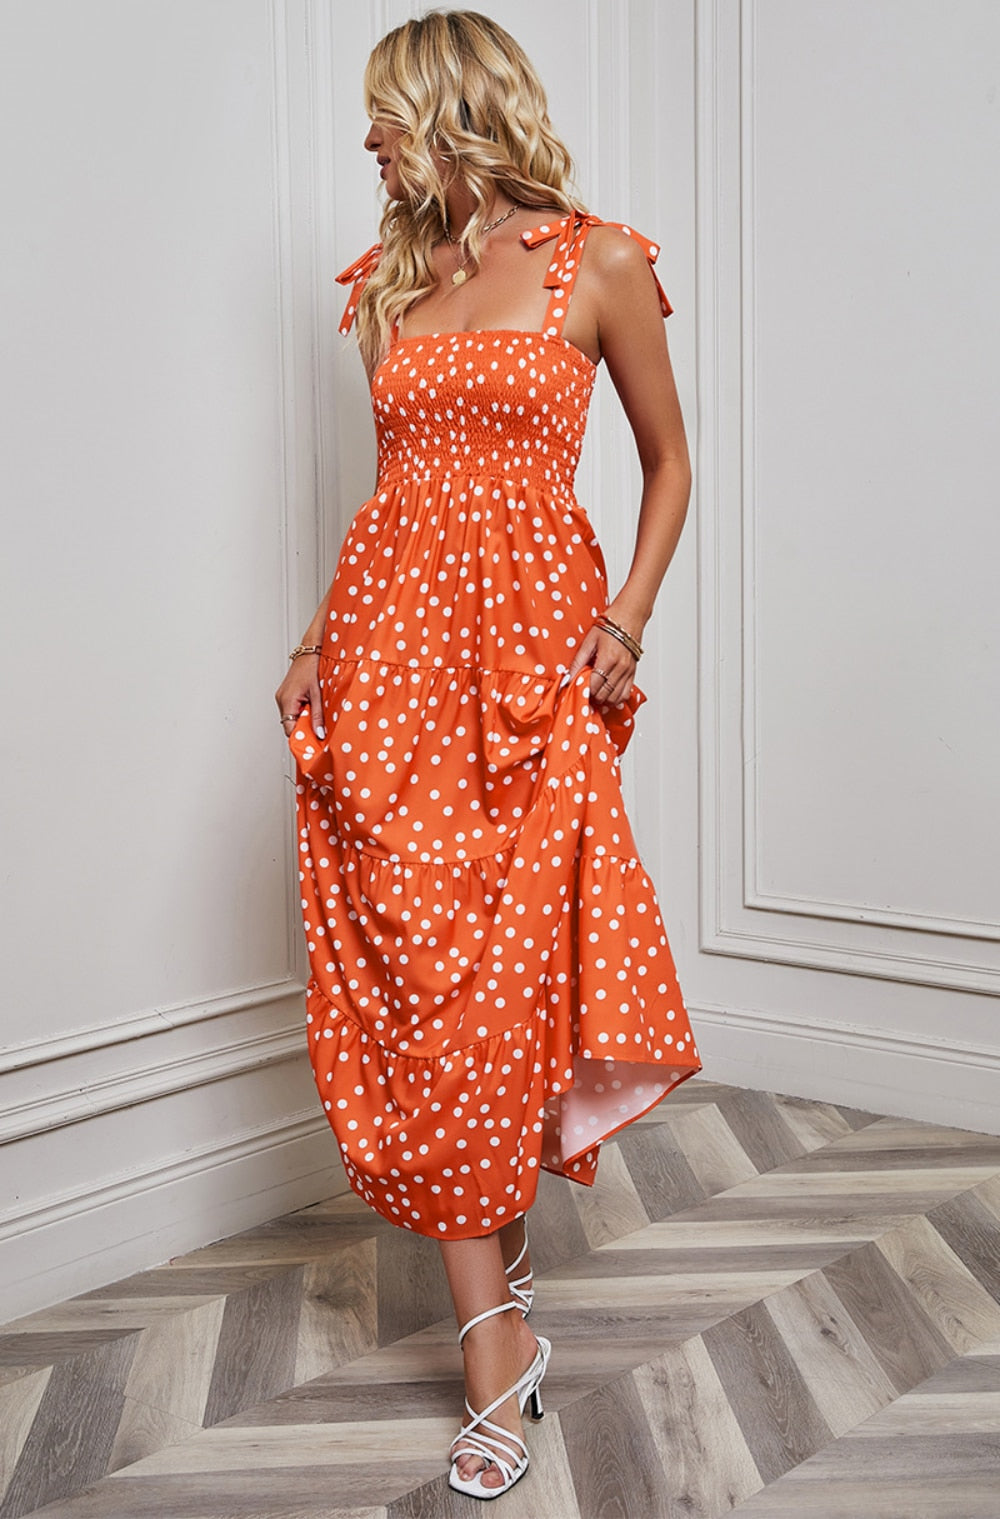 Summer Slit Dress Beach Dot Holiday Dresses for Women - WD8204